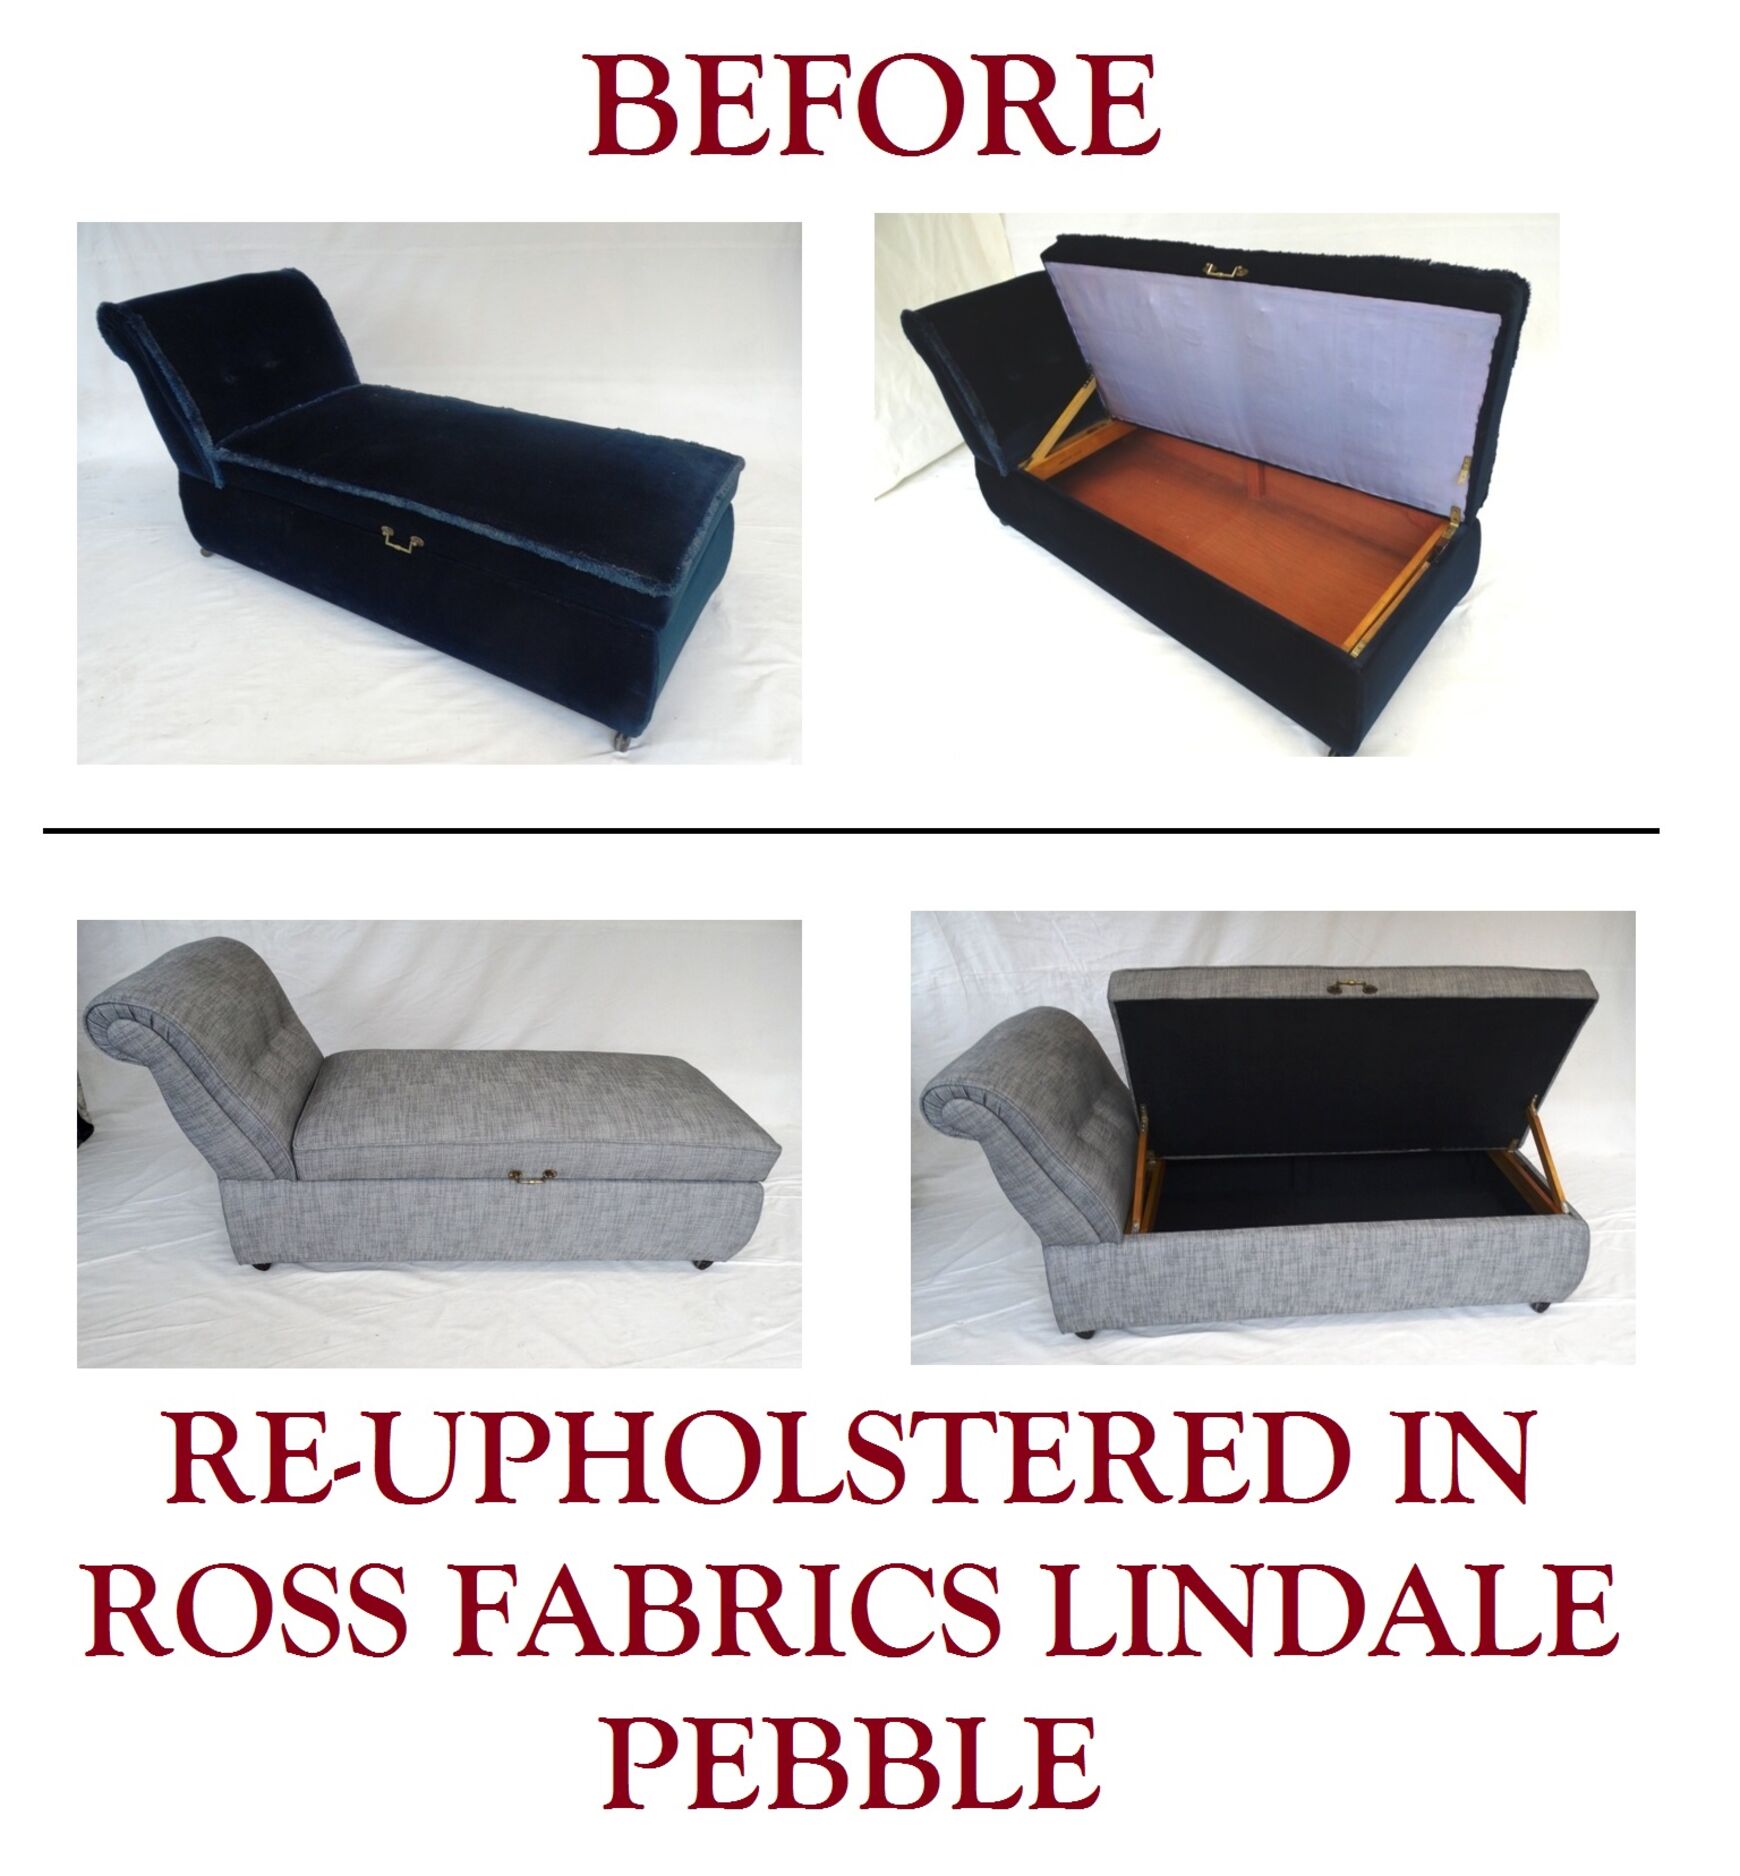 Ross Fabrics Lindale Pebble